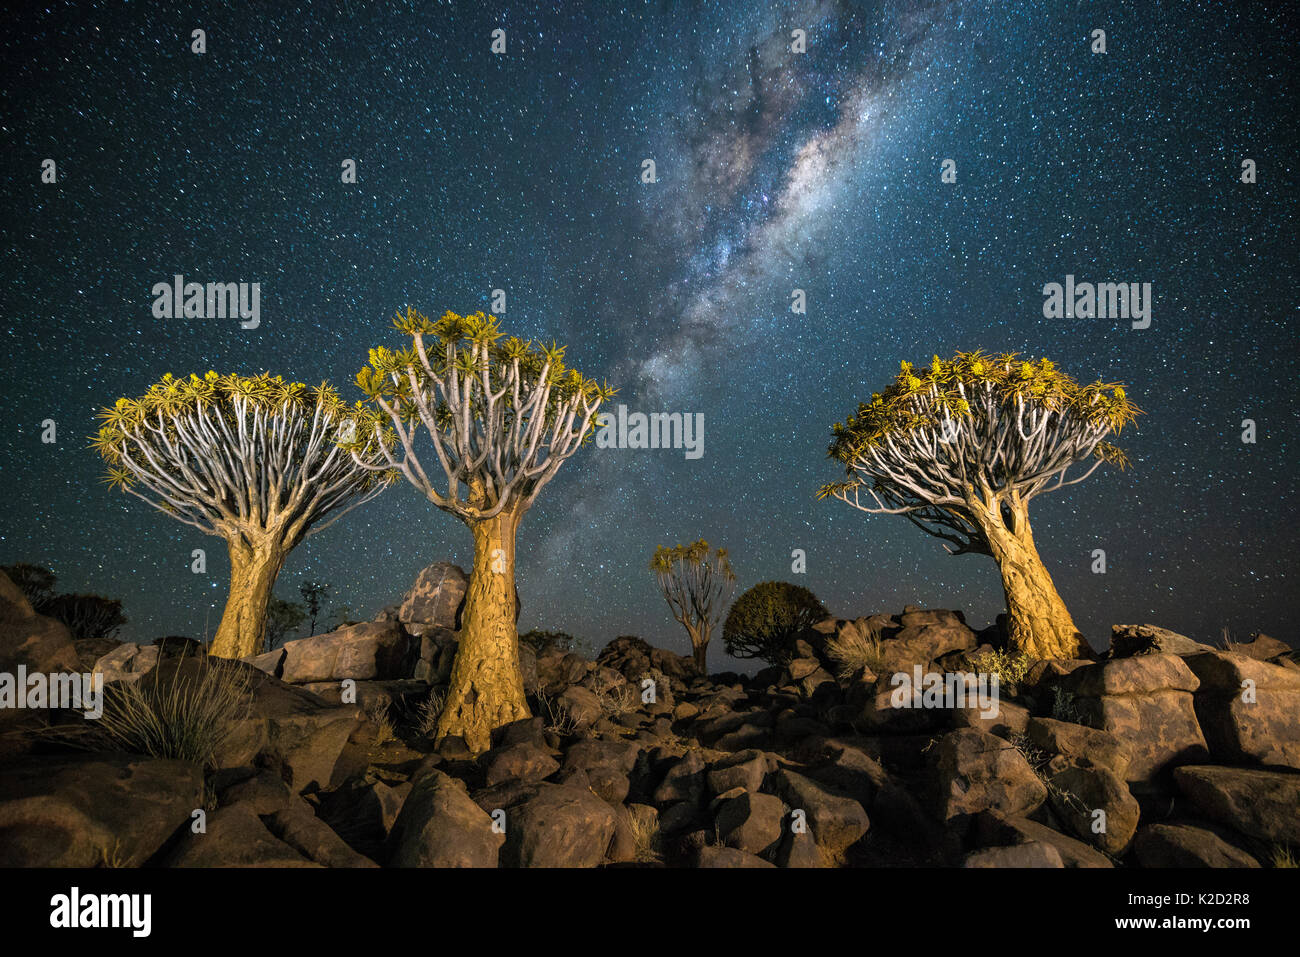 Per Quiver tree forest (Aloe dichotoma) durante la notte con le stelle e la via lattea, Keetmanshoop, Namibia. Foto Stock